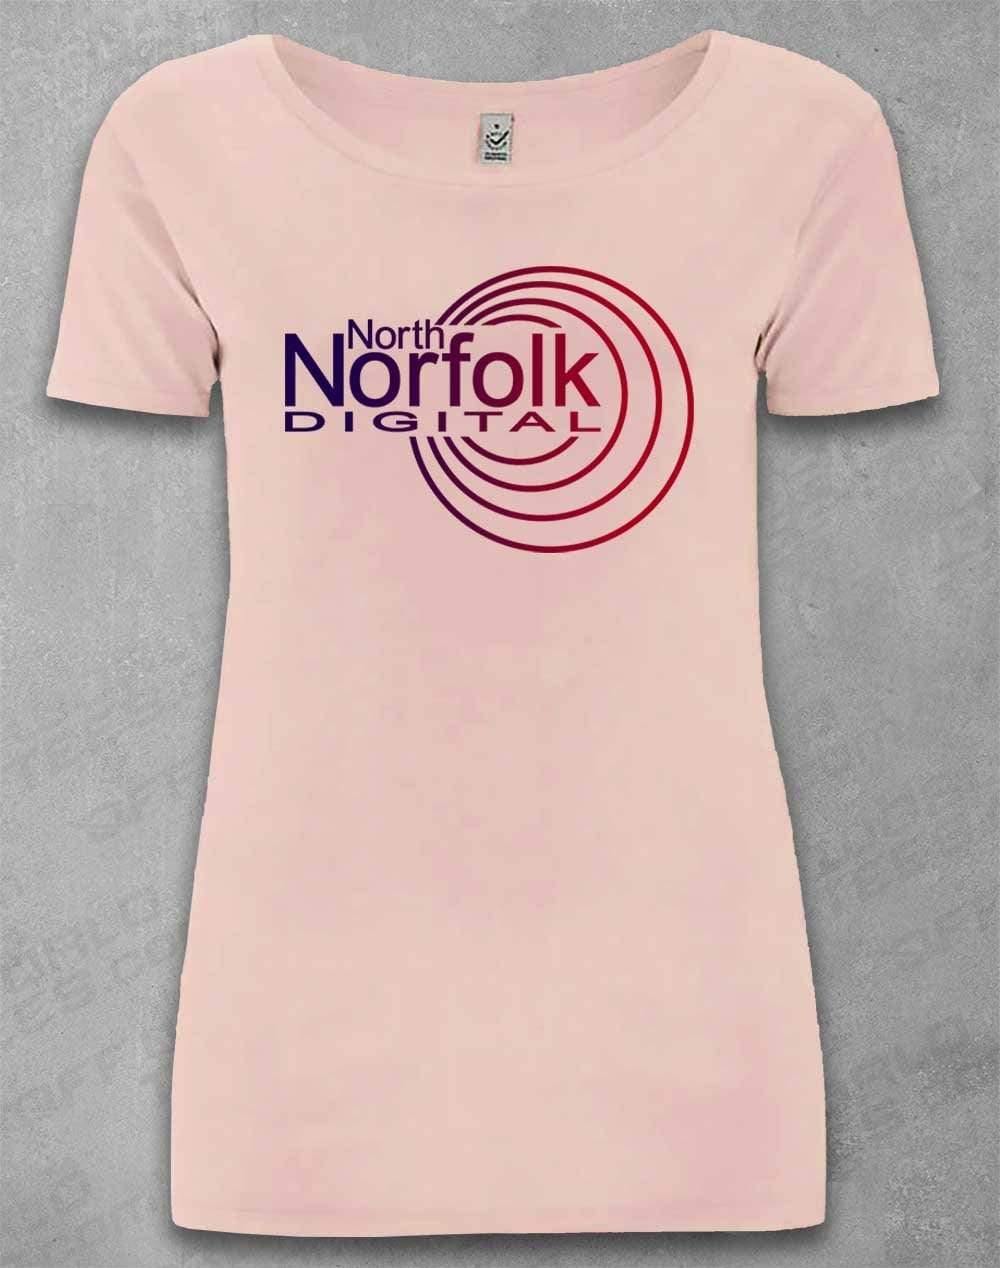 DELUXE North Norfolk Digital Organic Scoop Neck T-Shirt 8-10 / Light Pink  - Off World Tees